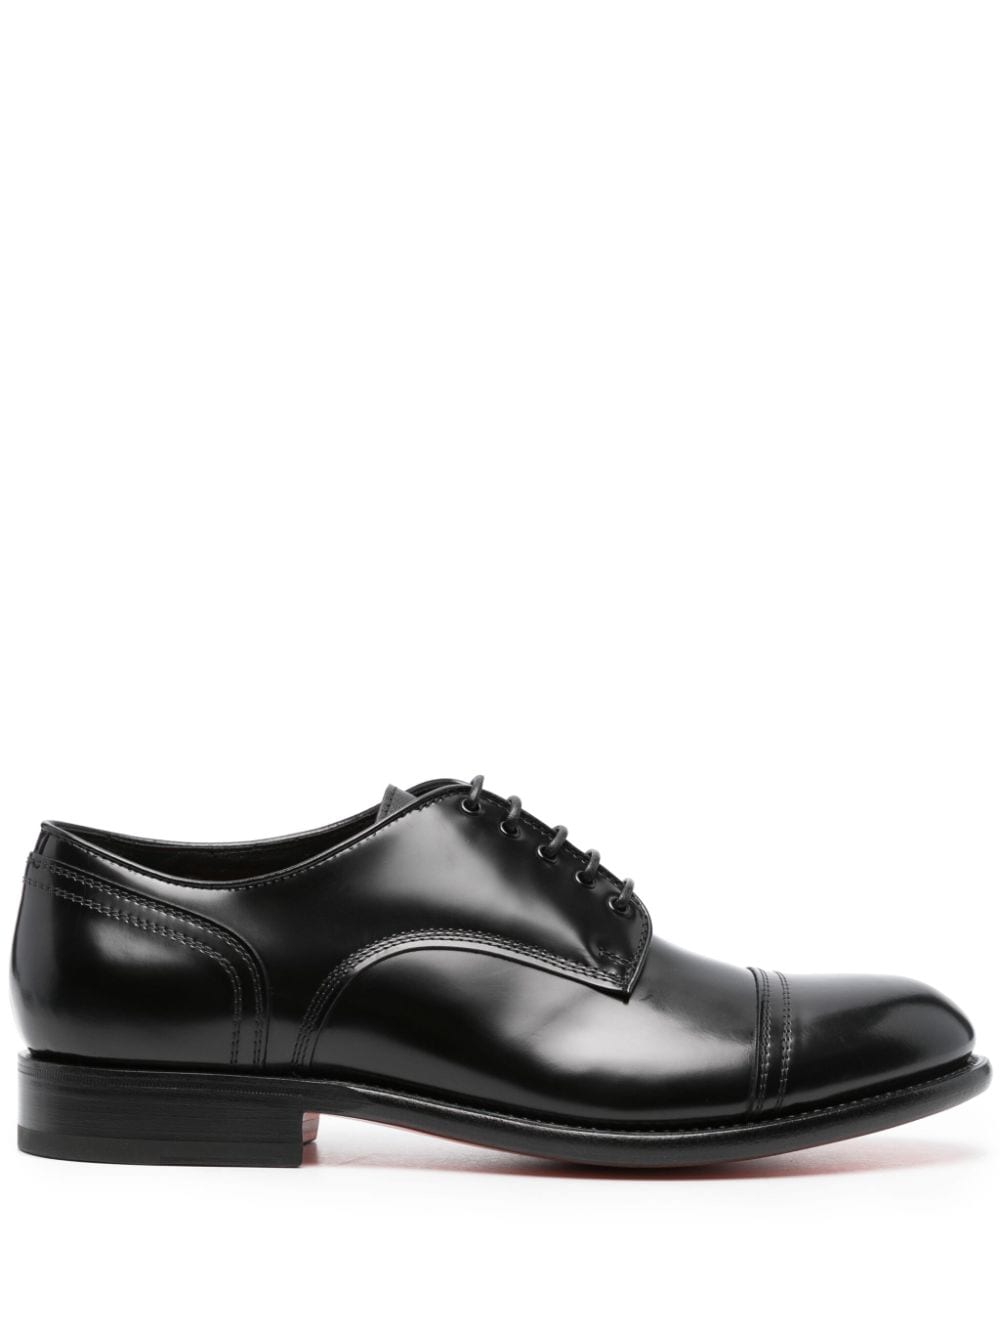 Santoni patent leather Oxford shoes - Black von Santoni